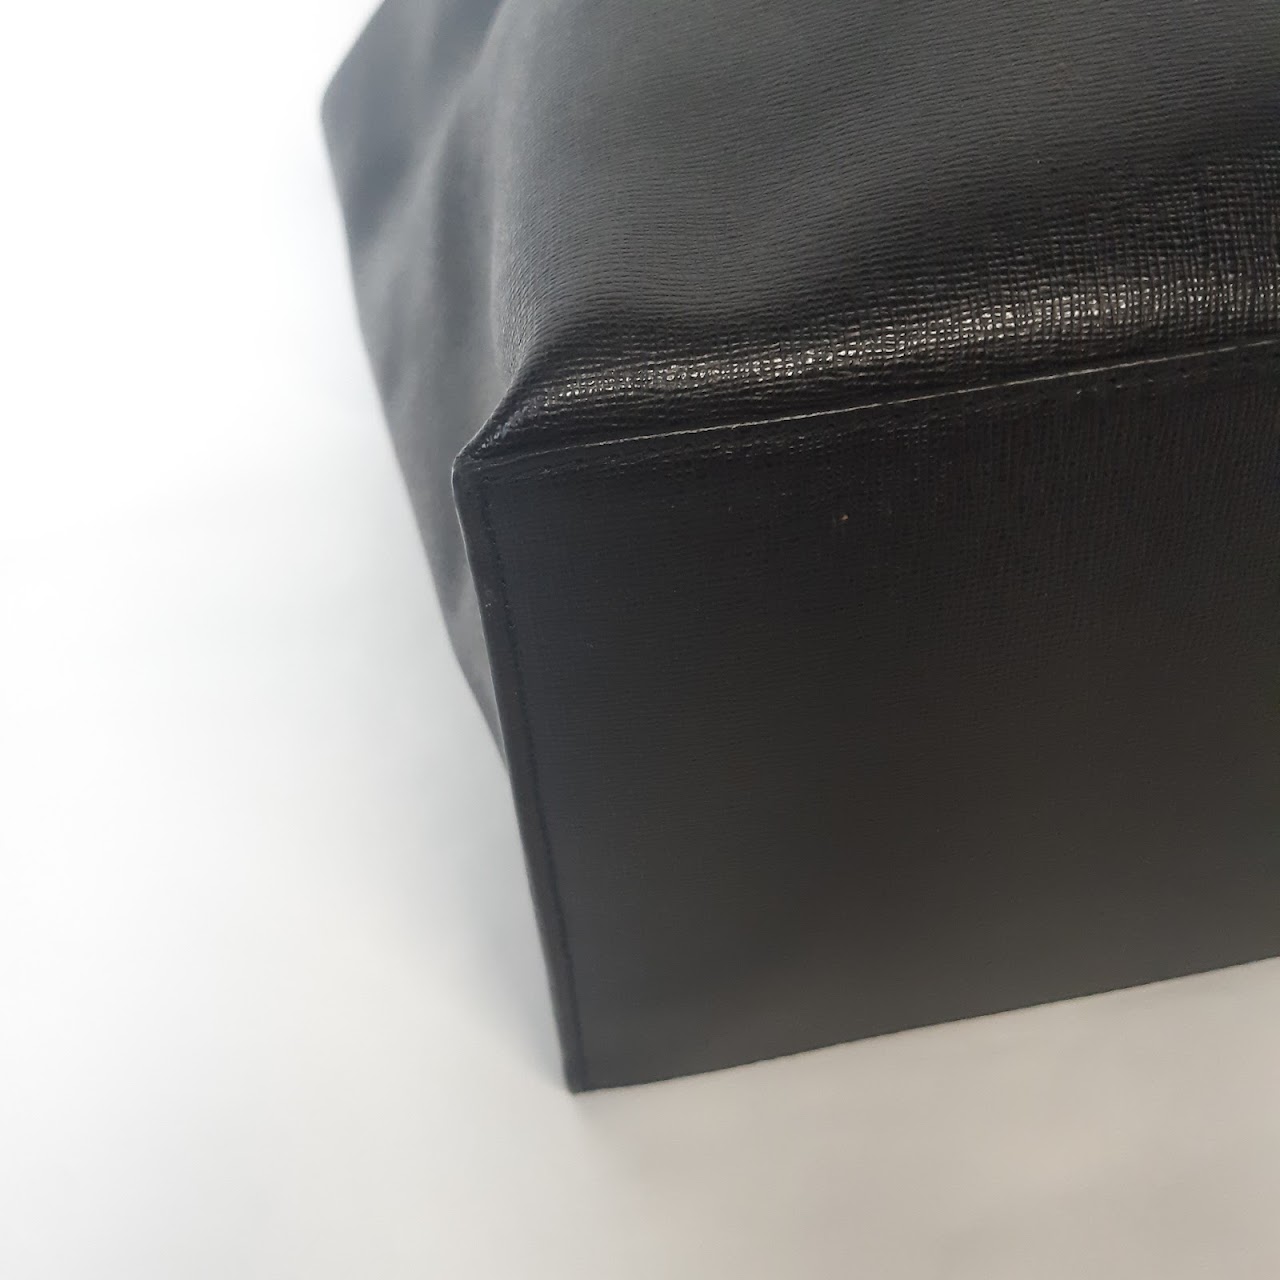 Furla Black Leather Tote Bag